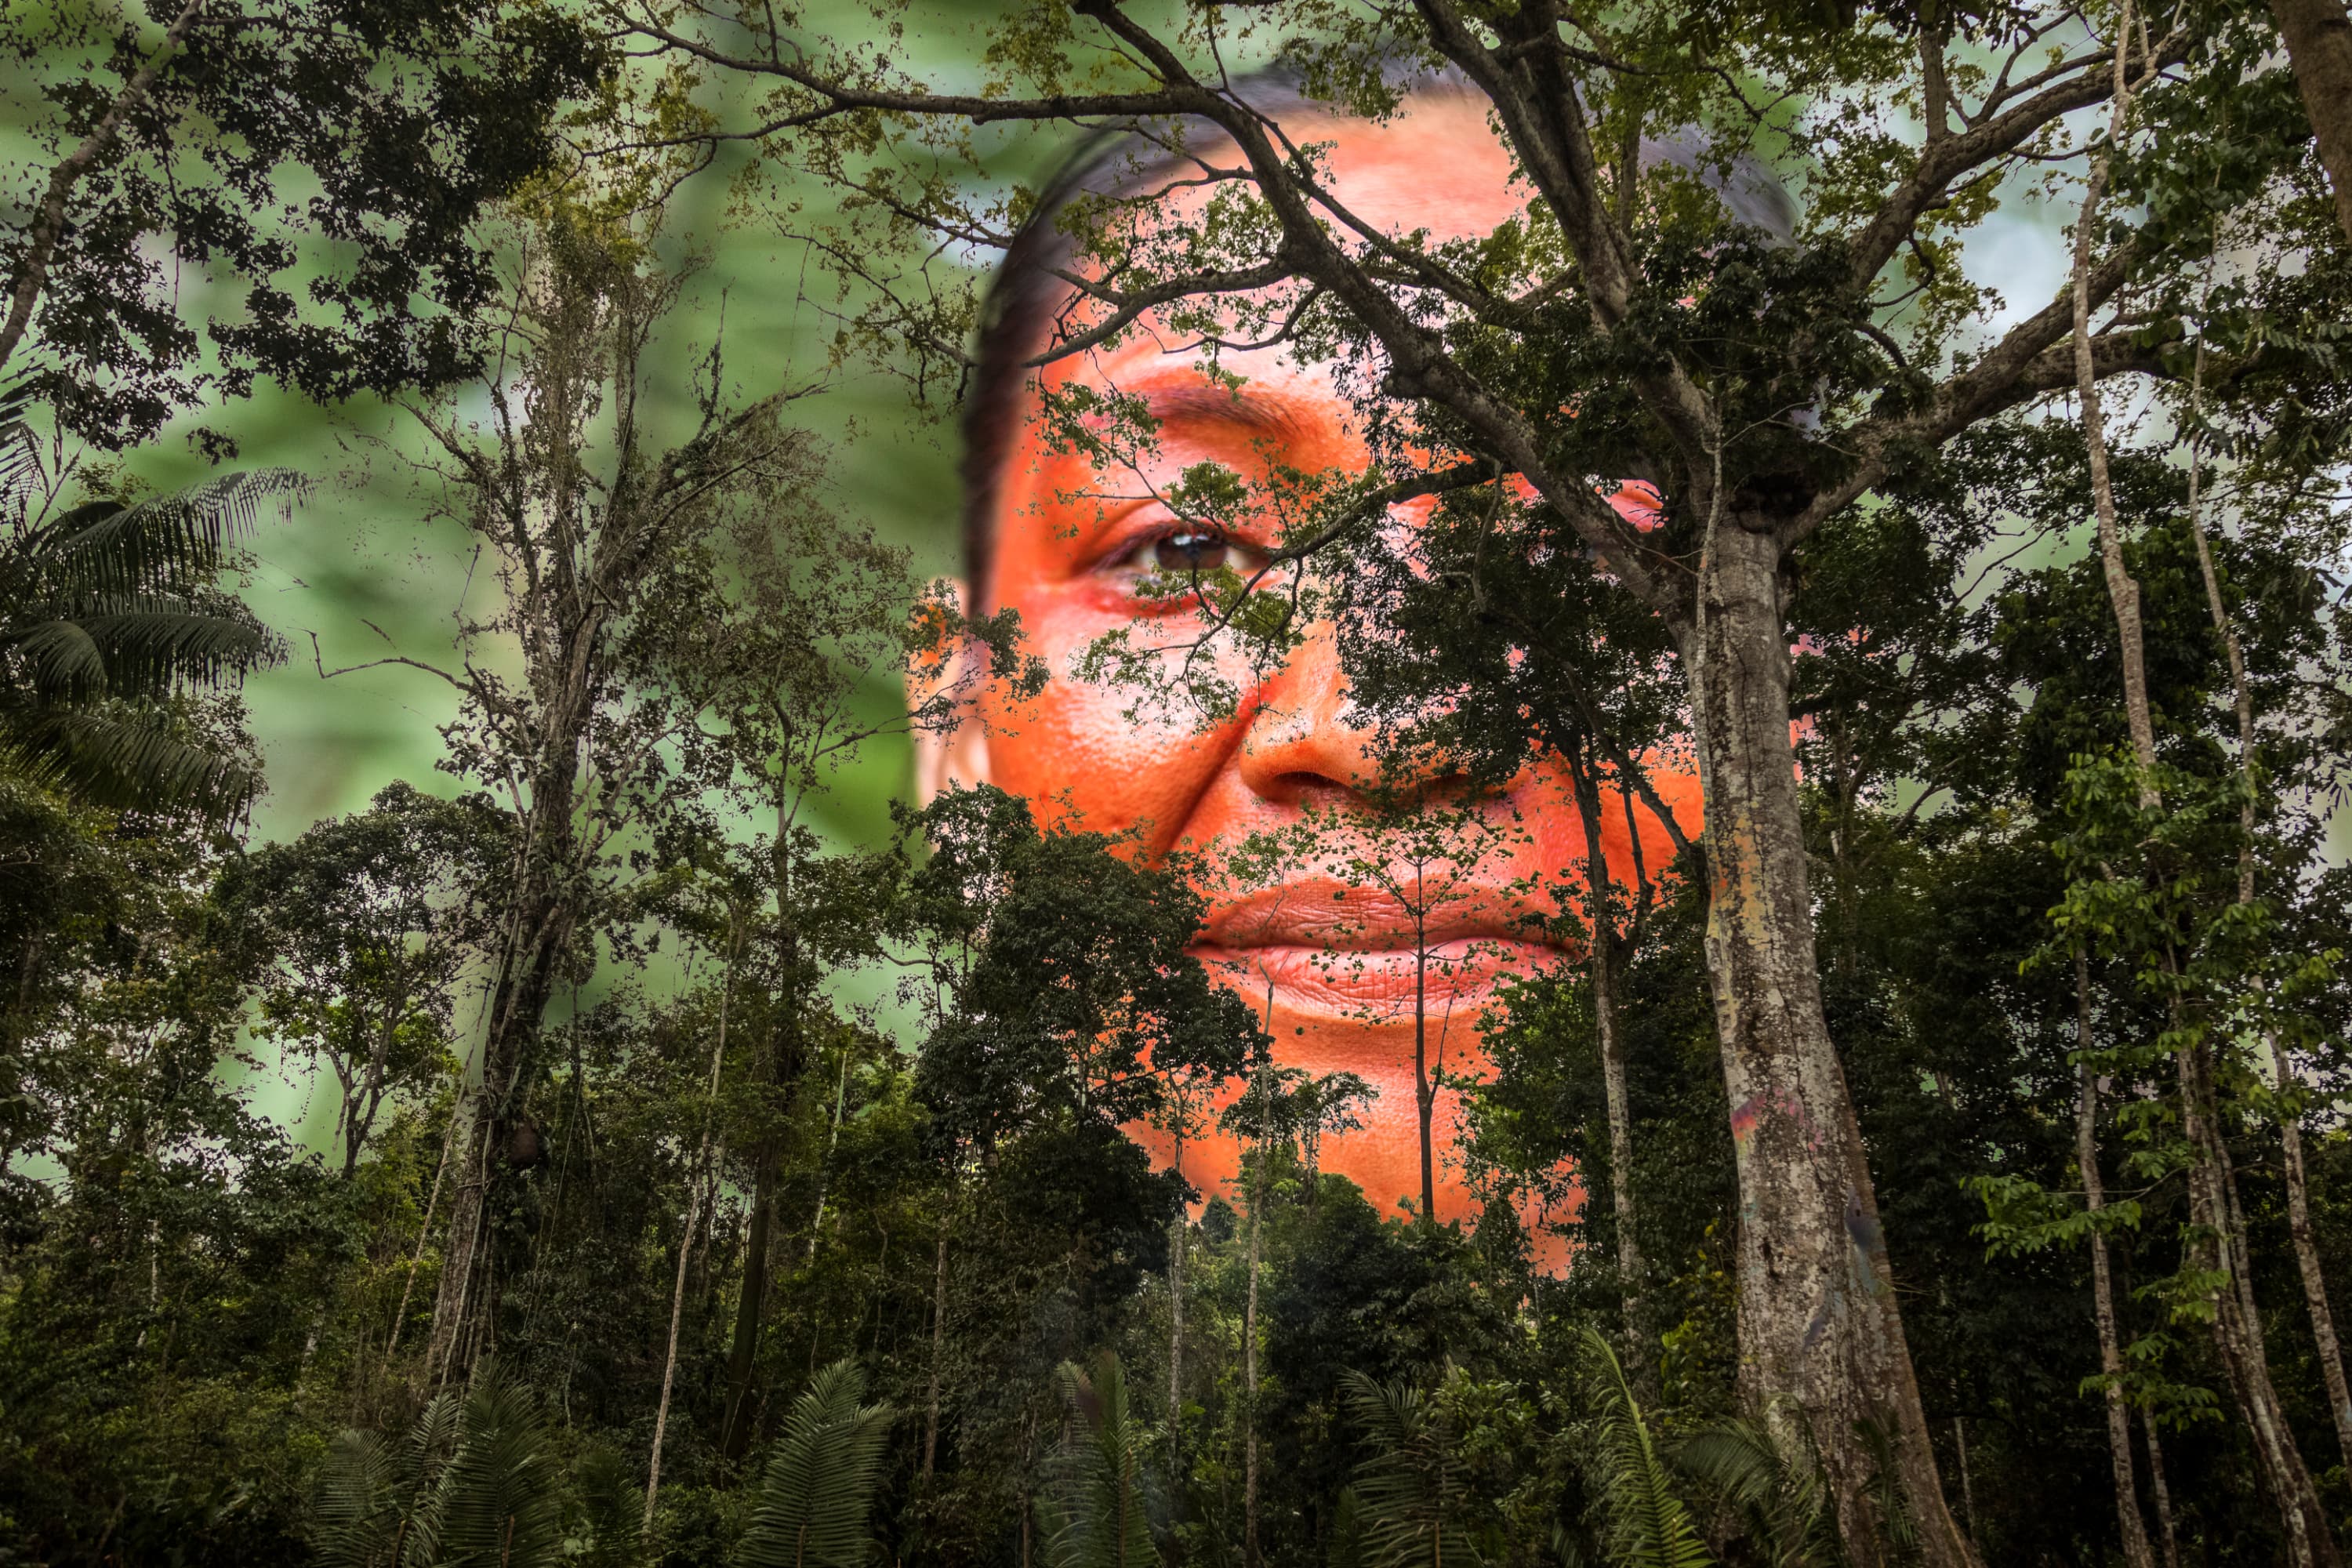 Ensaio fotográfico: Na floresta com os Yawanawás